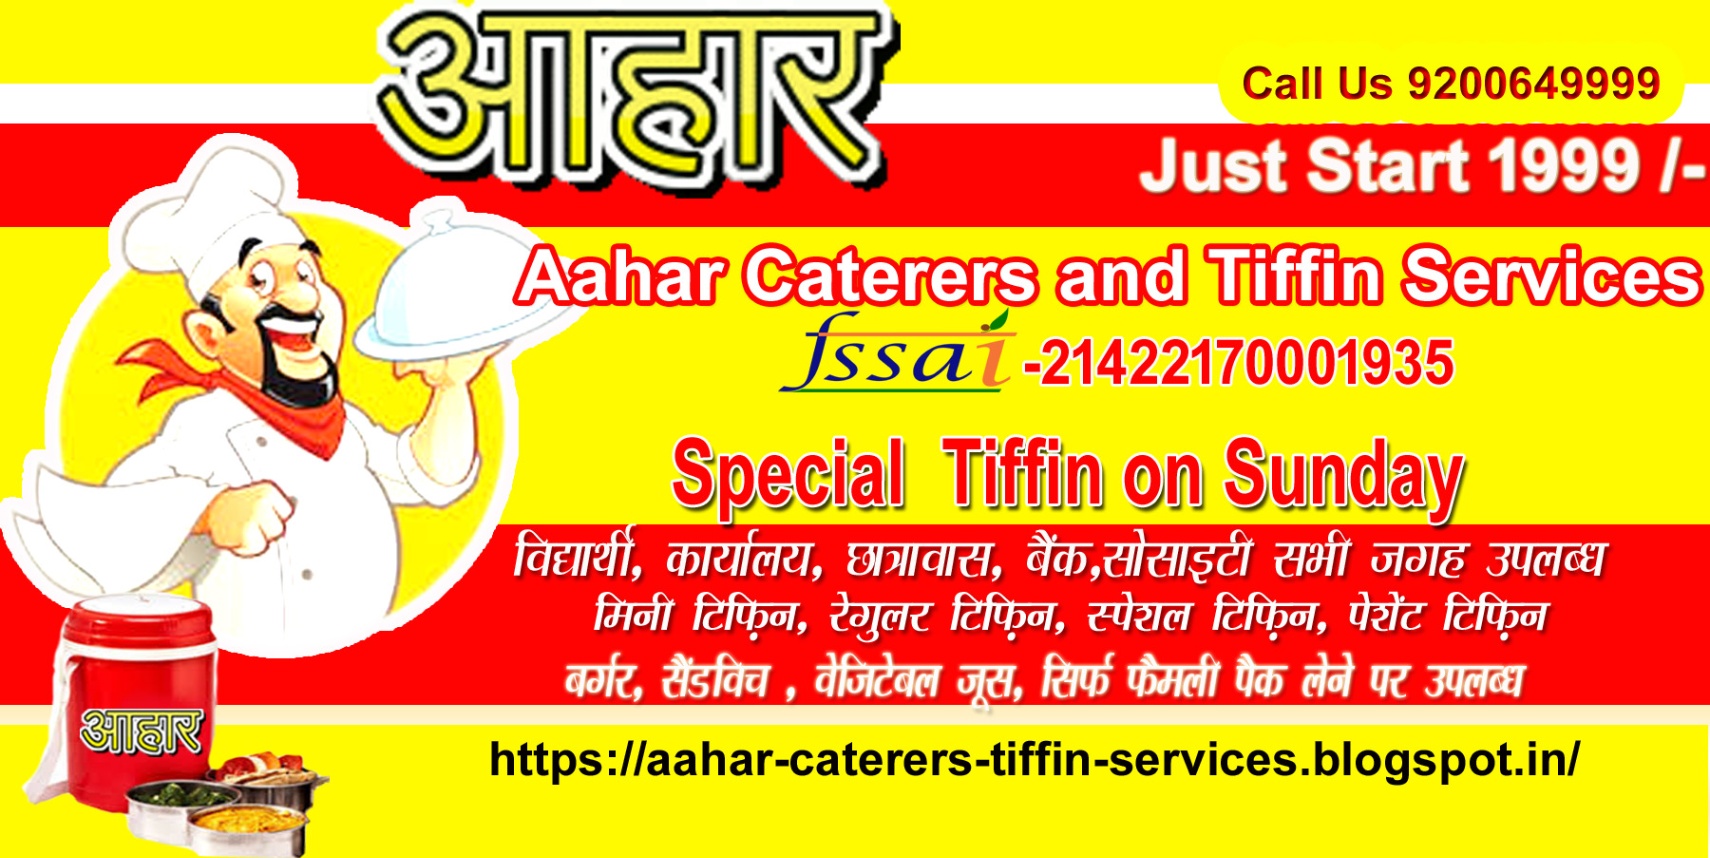 Tiffin Service in Jabalpur Location 